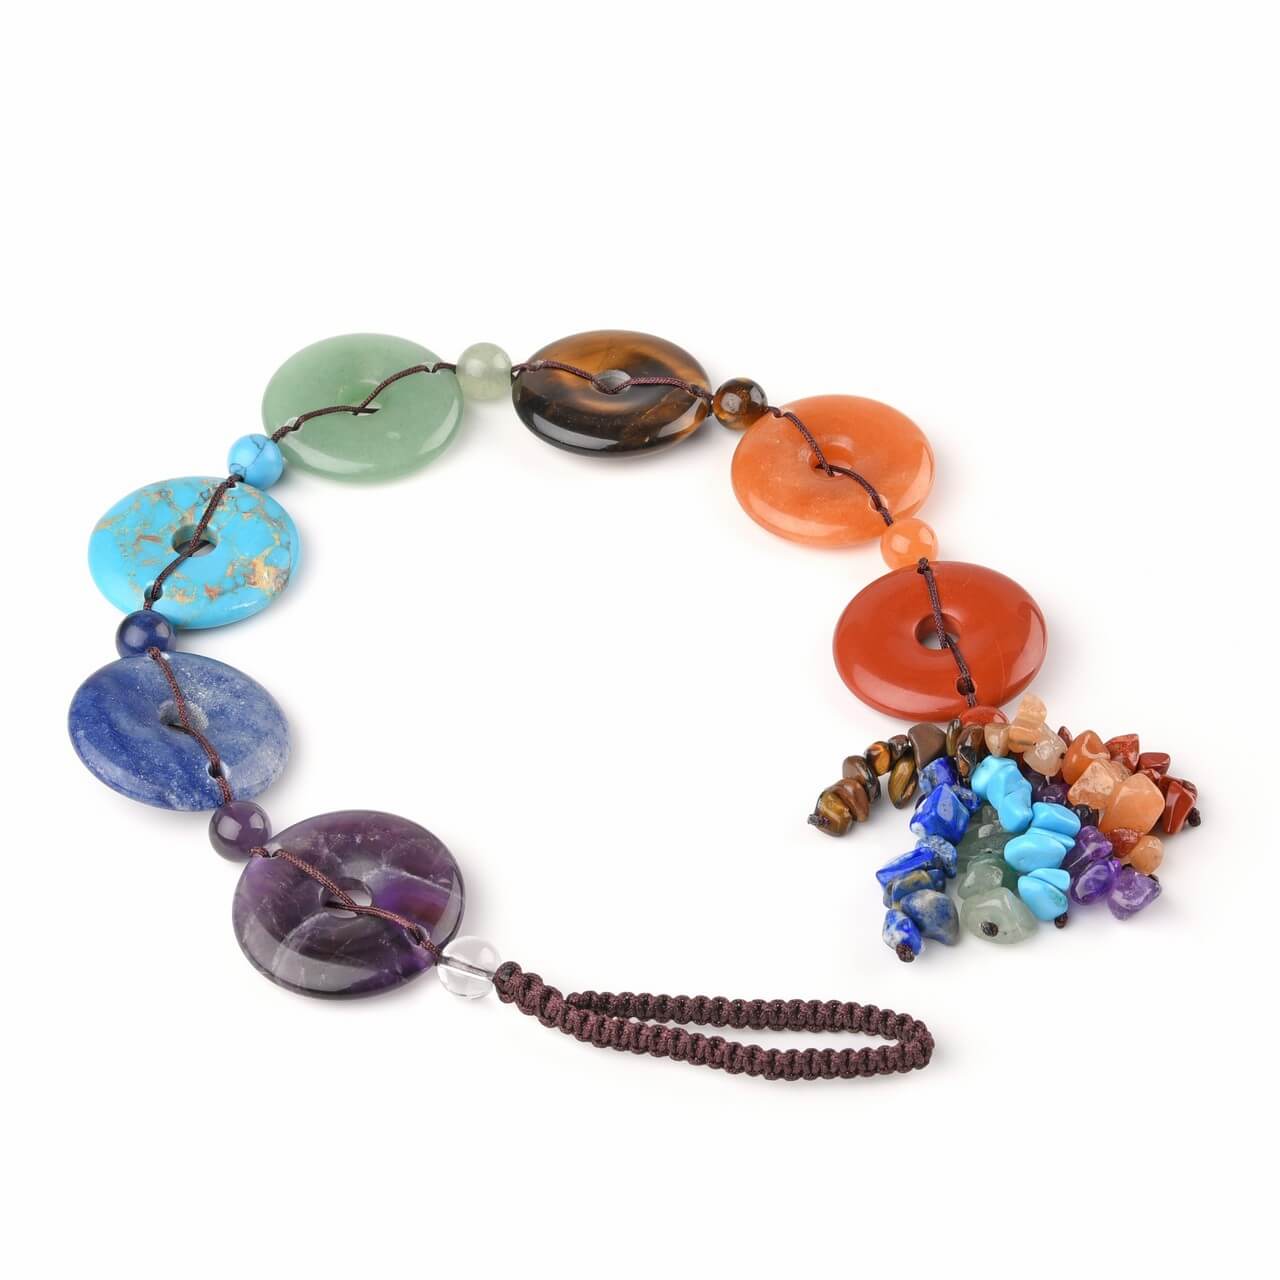 jovivi 7 chakras gemstones reiki healing hanging ornament for meditation